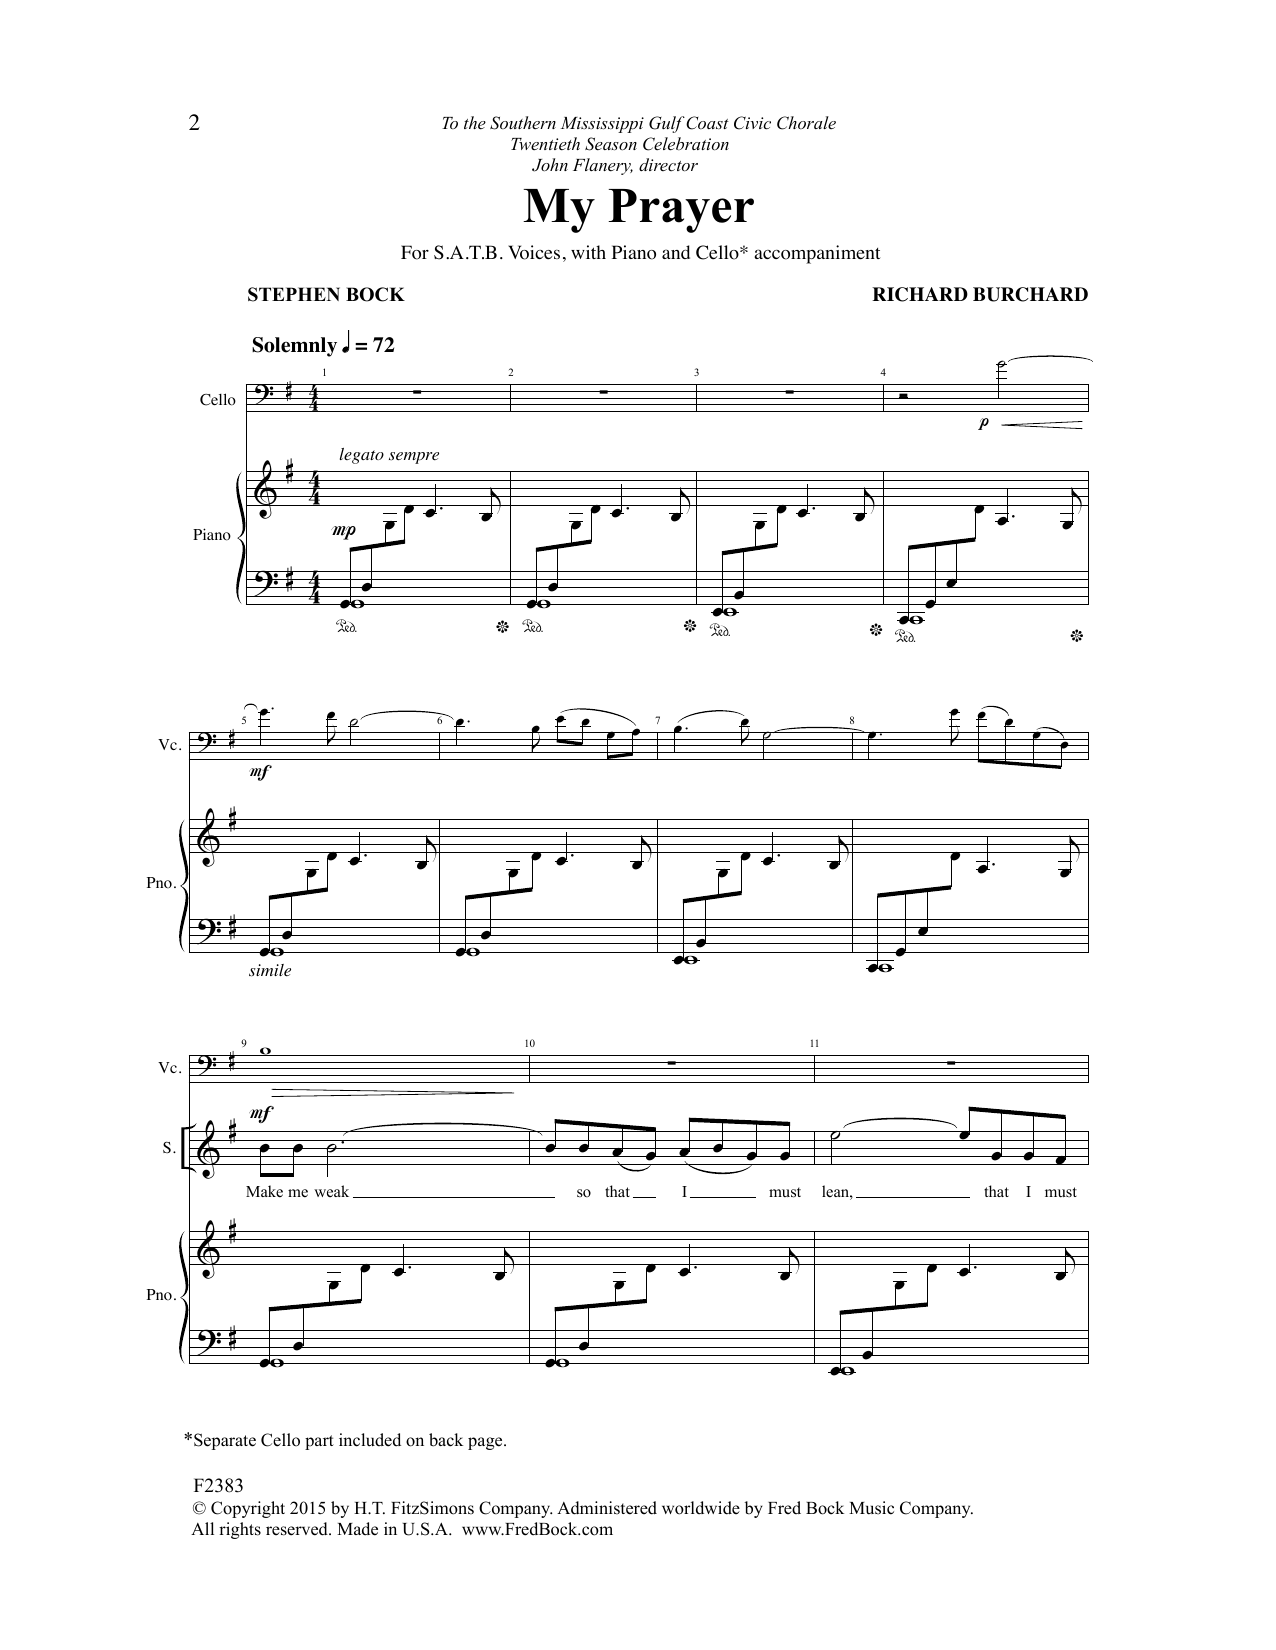 Download Richard Burchard My Prayer Sheet Music